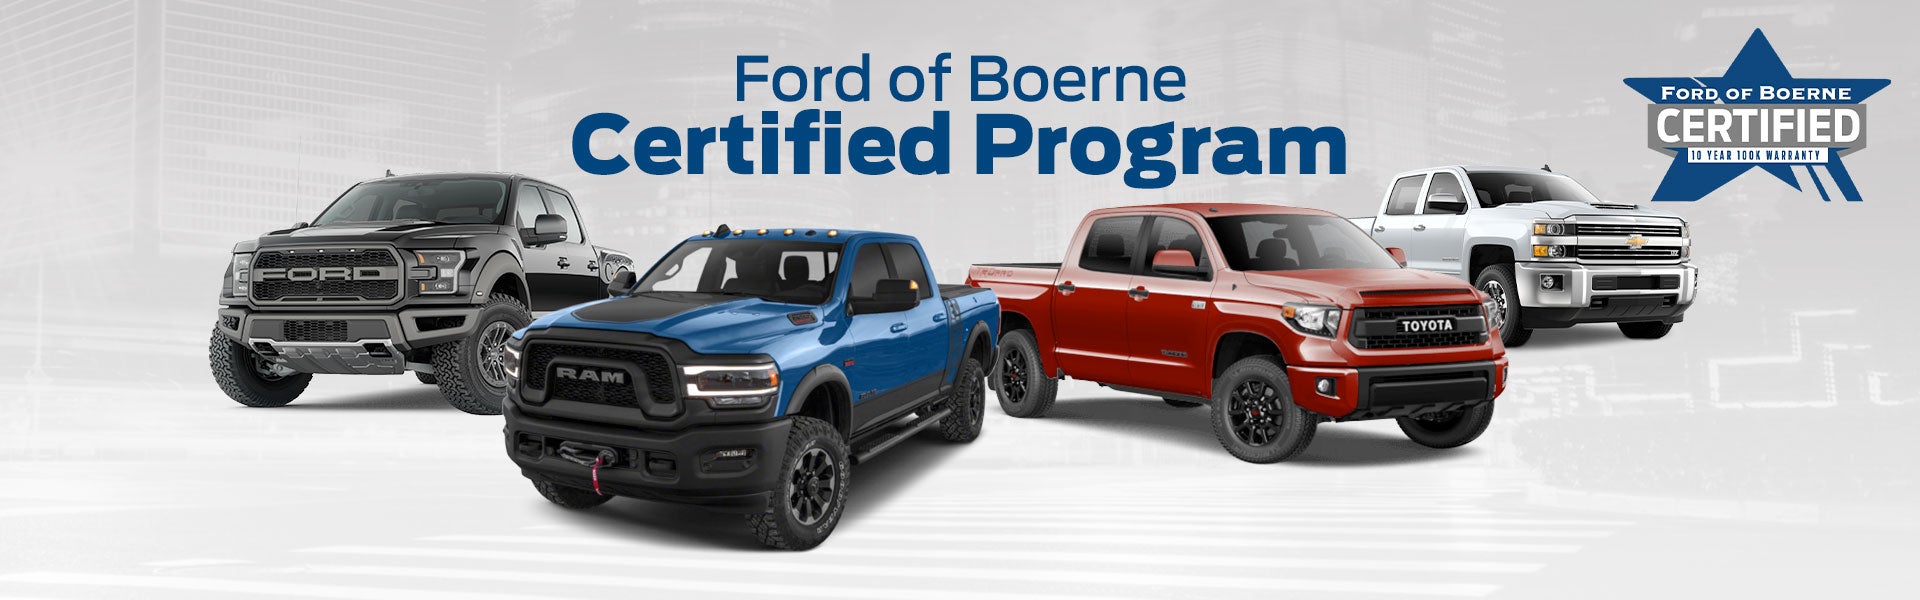 Ford of Boerne Certified Used Car Program